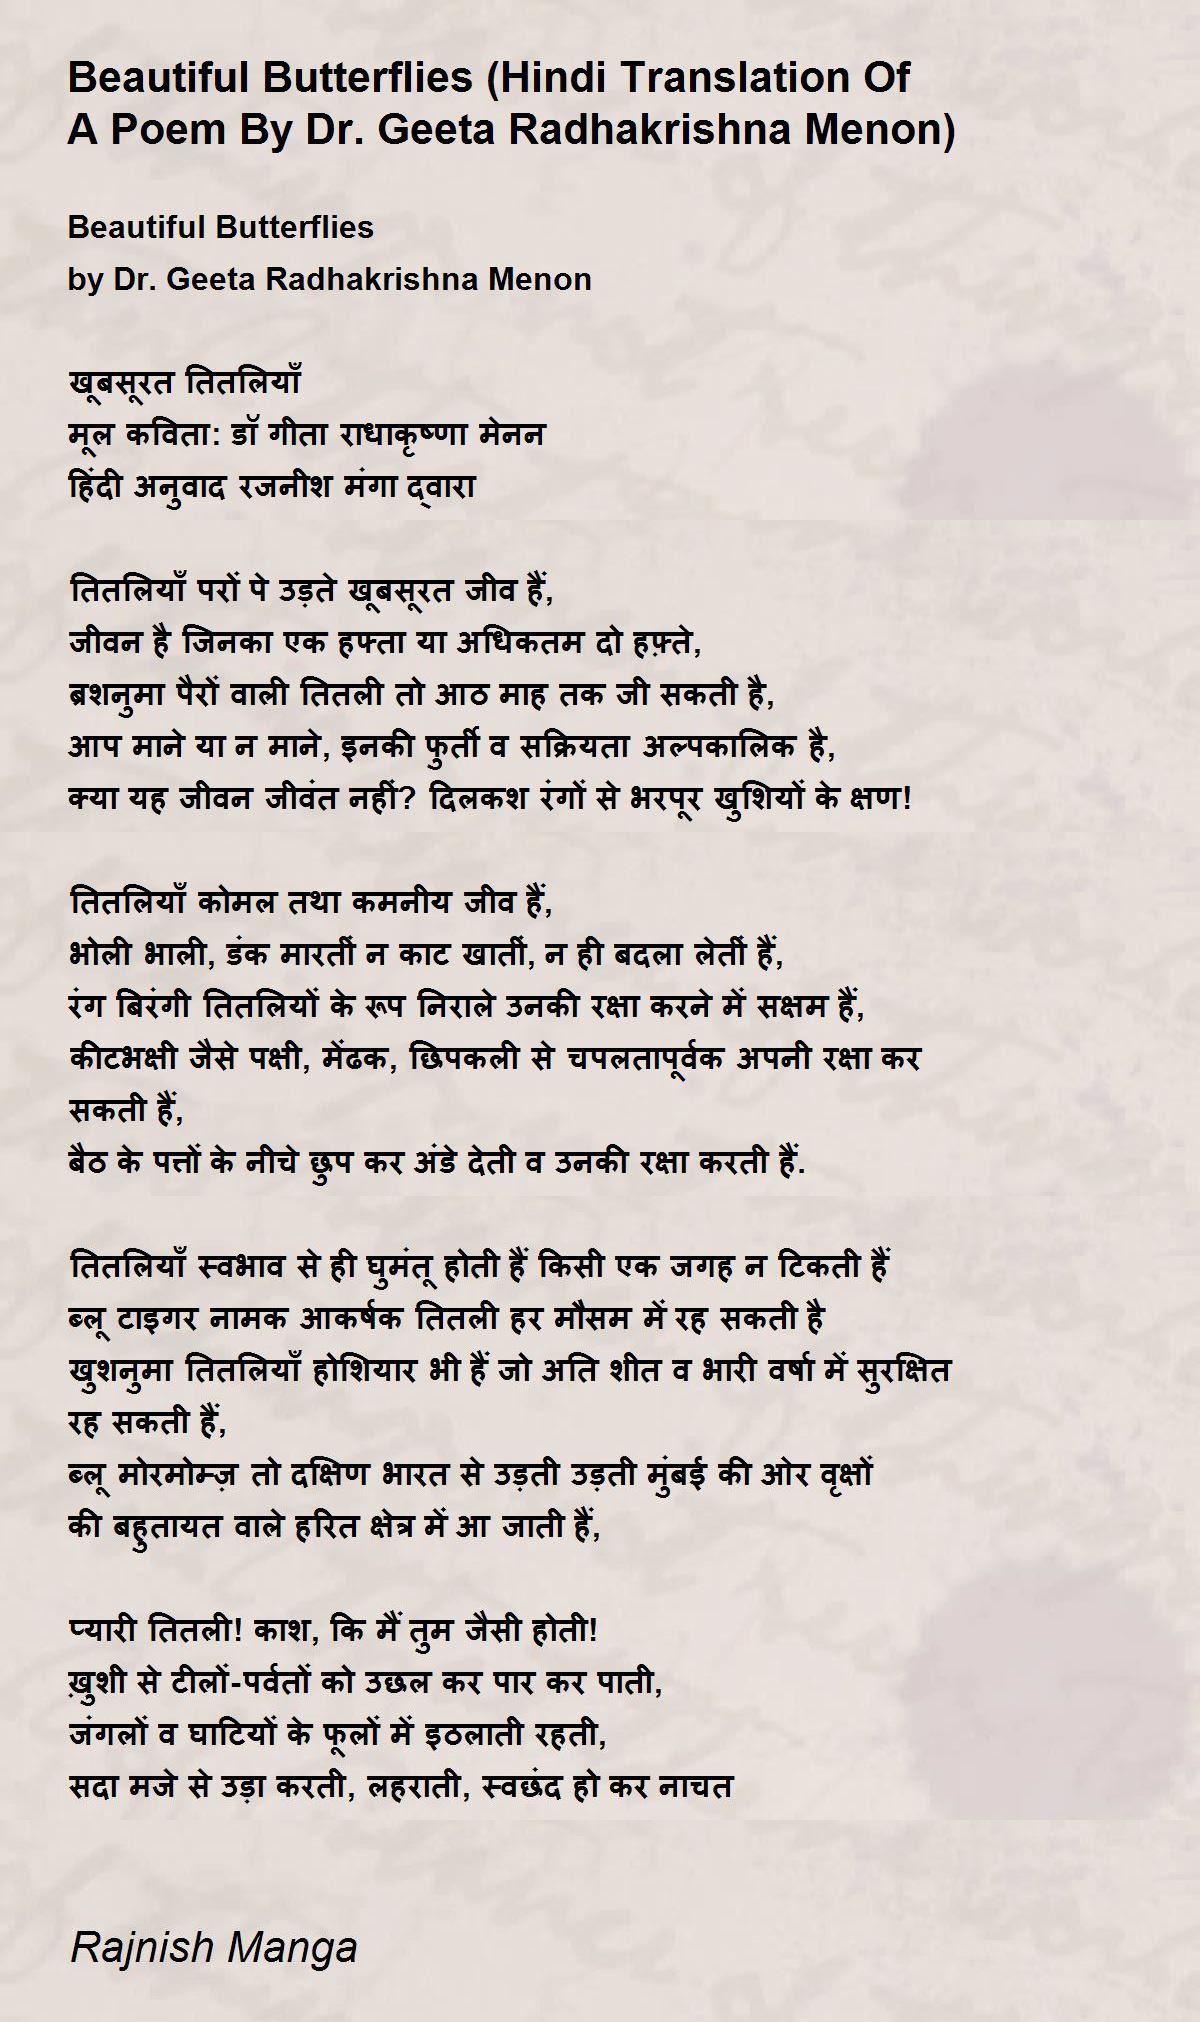 Beautiful Butterflies (Hindi Translation Of A Poem By Dr. Geeta  Radhakrishna Menon) - Beautiful Butterflies (Hindi Translation Of A Poem By  Dr. Geeta Radhakrishna Menon) Poem by Rajnish Manga